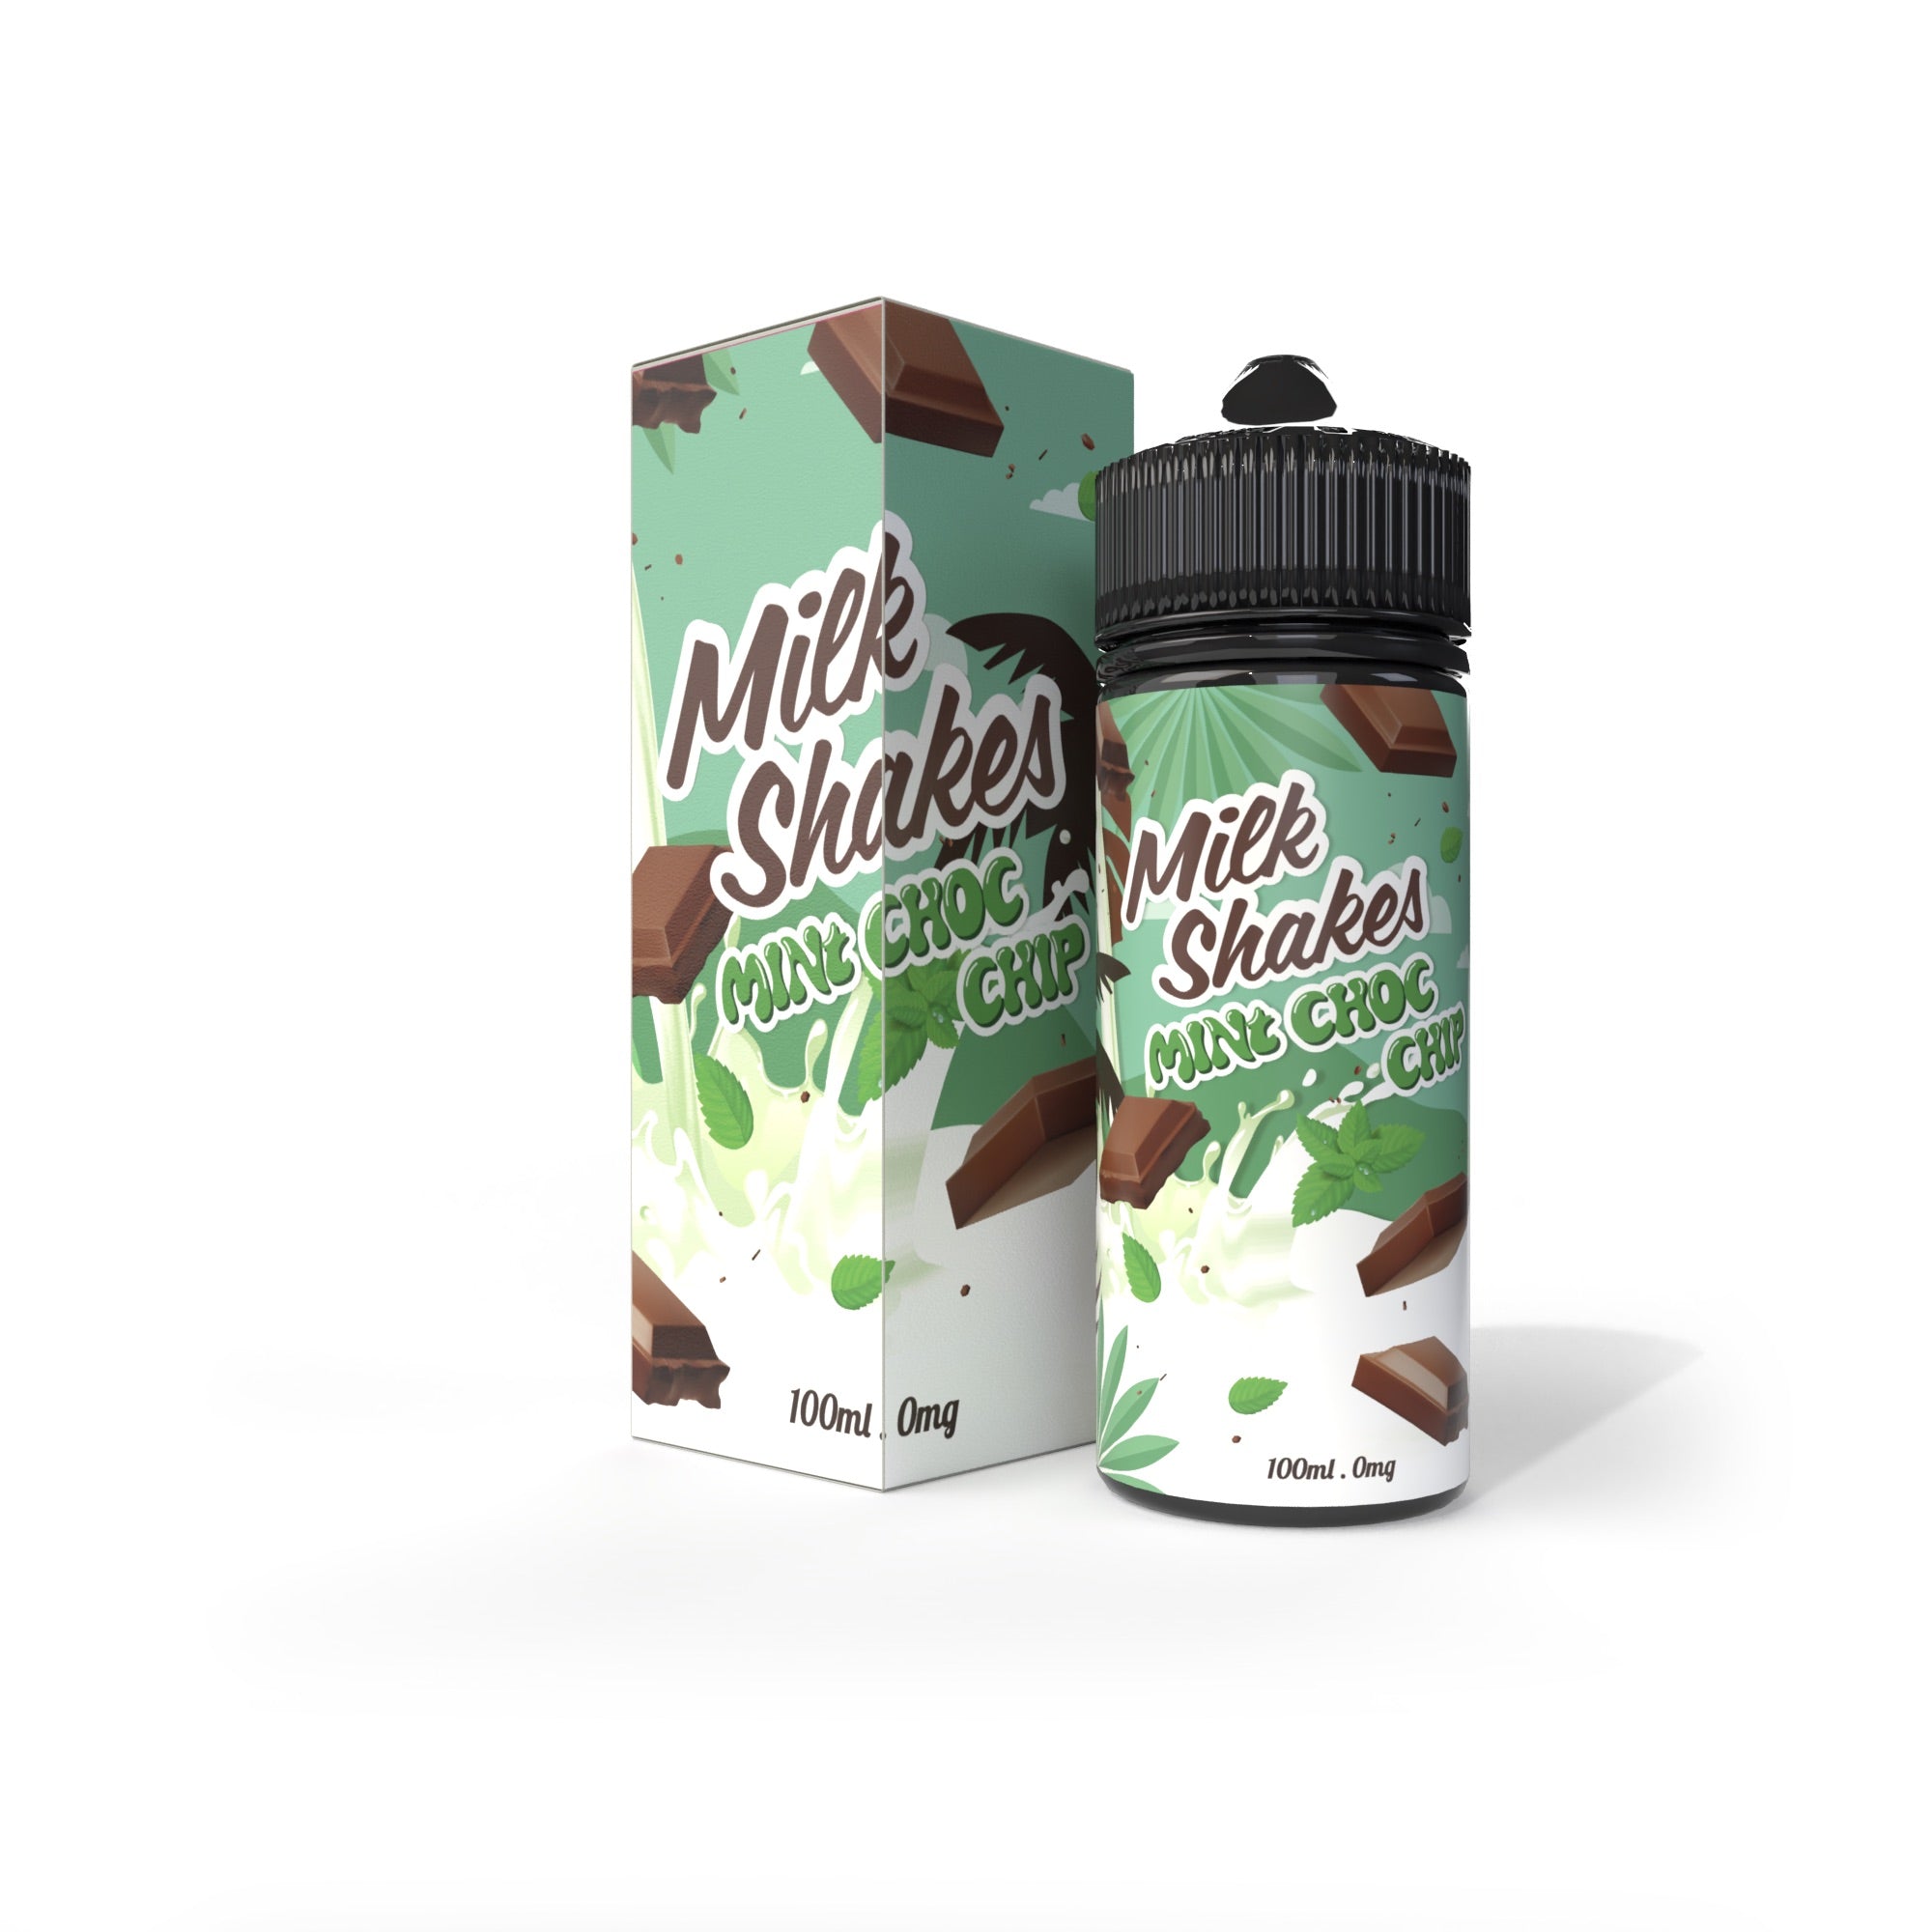 Buy Mint Choc Chip Milkshake By East Coast E-Juice - Wick and Wire Co Melbourne Vape Shop, Victoria Australia